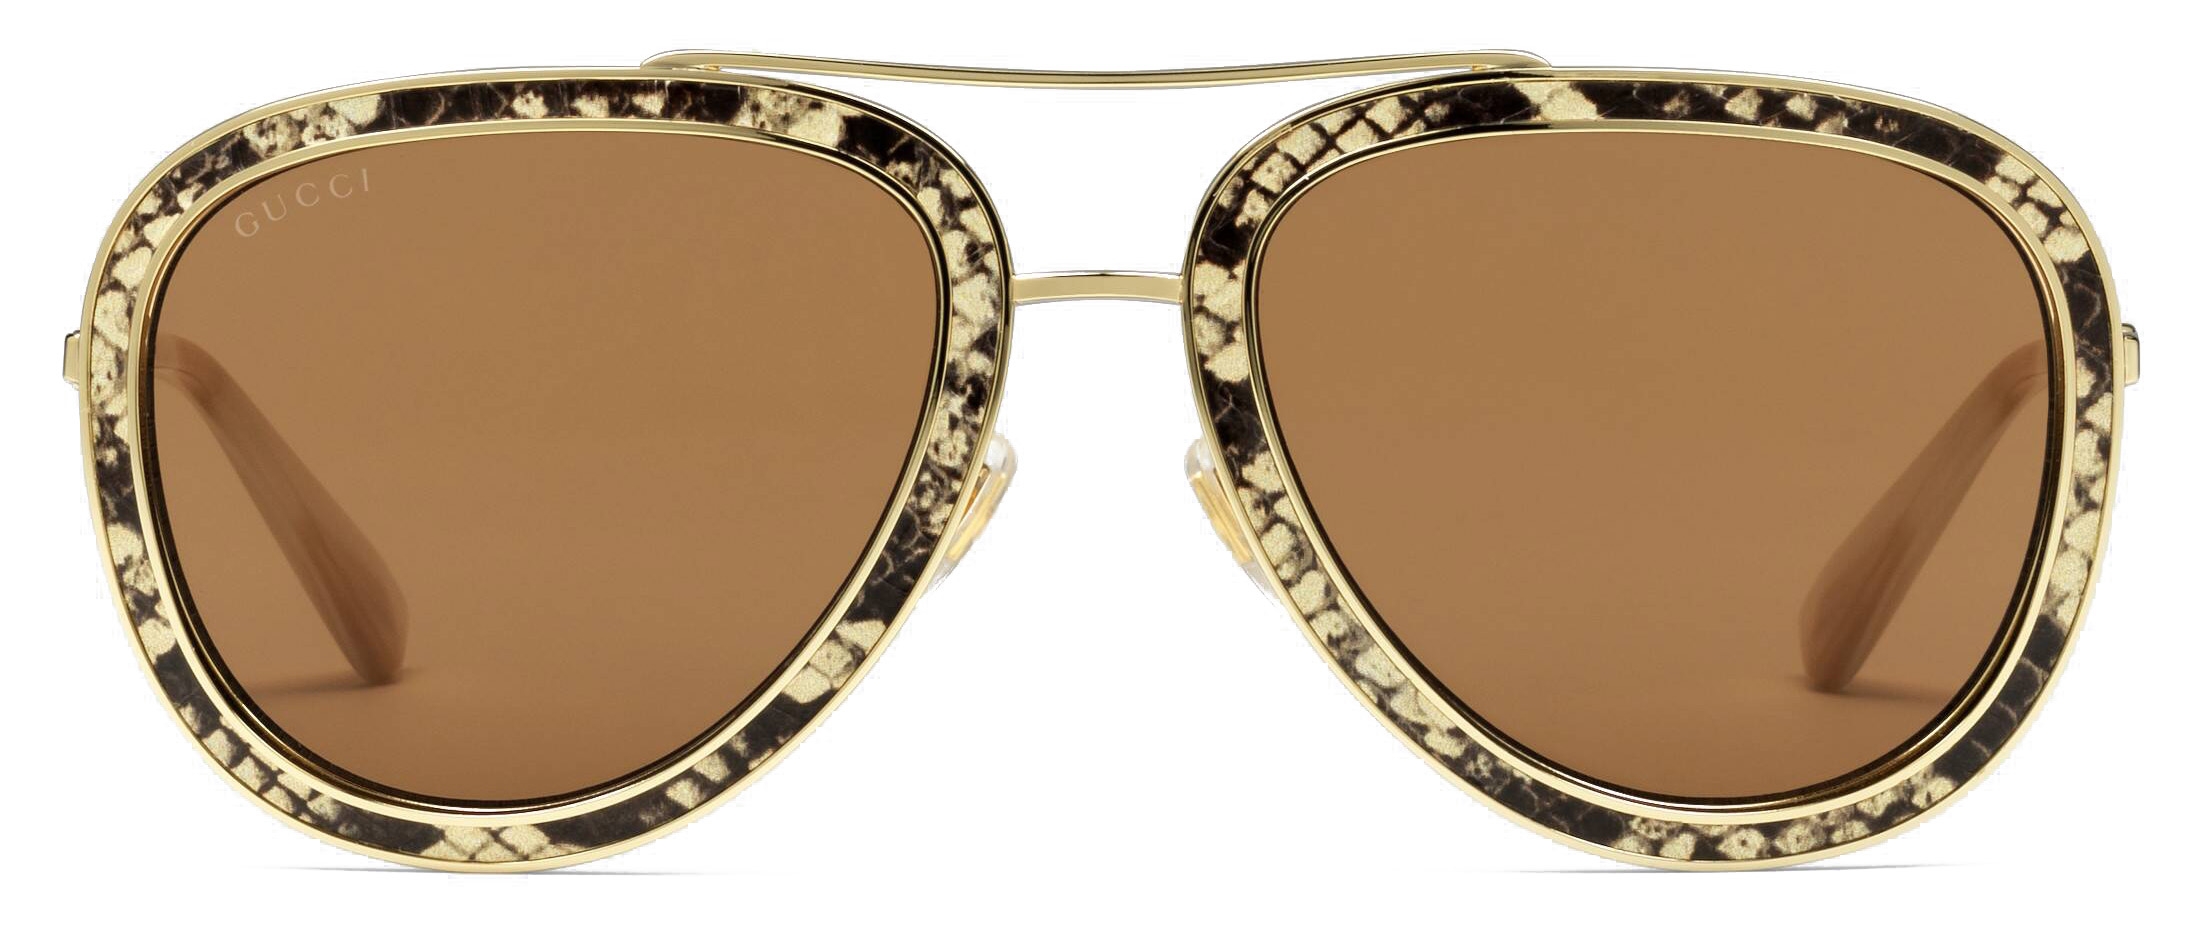 Gucci - Sunglasses with Leather - Gold Brown - Gucci - Avvenice